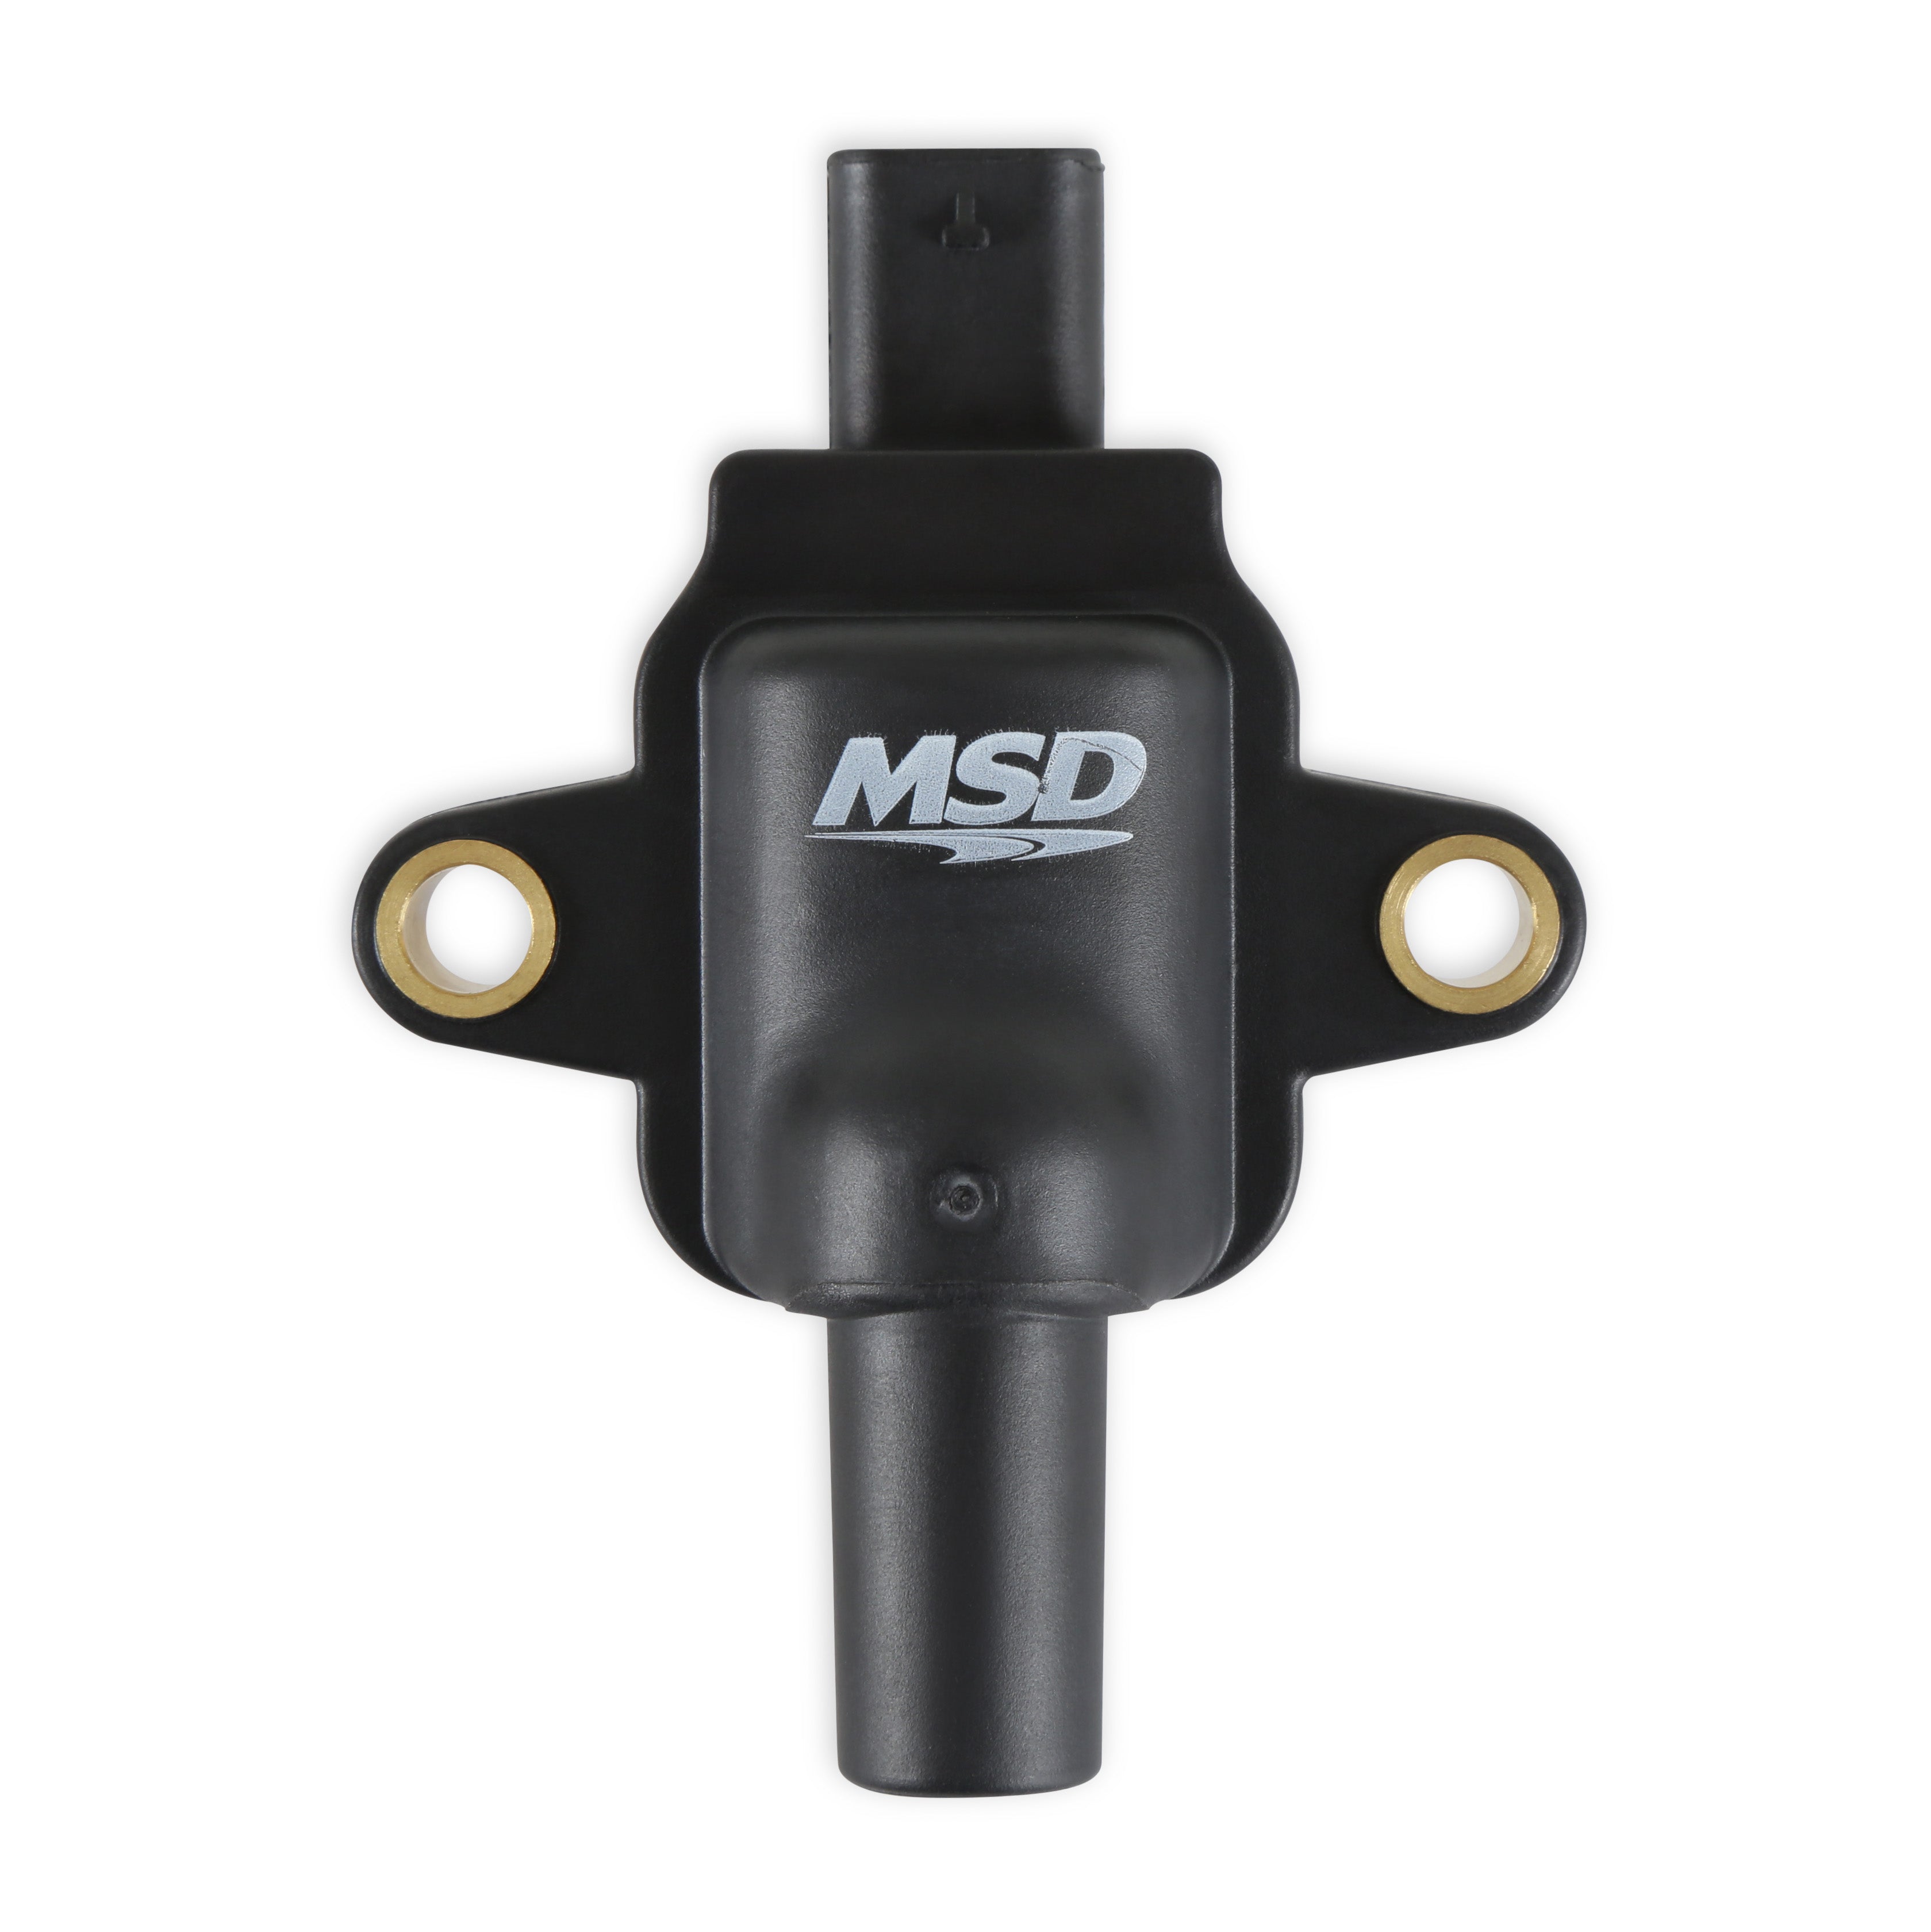 MSD Ignition Coil Set 828383